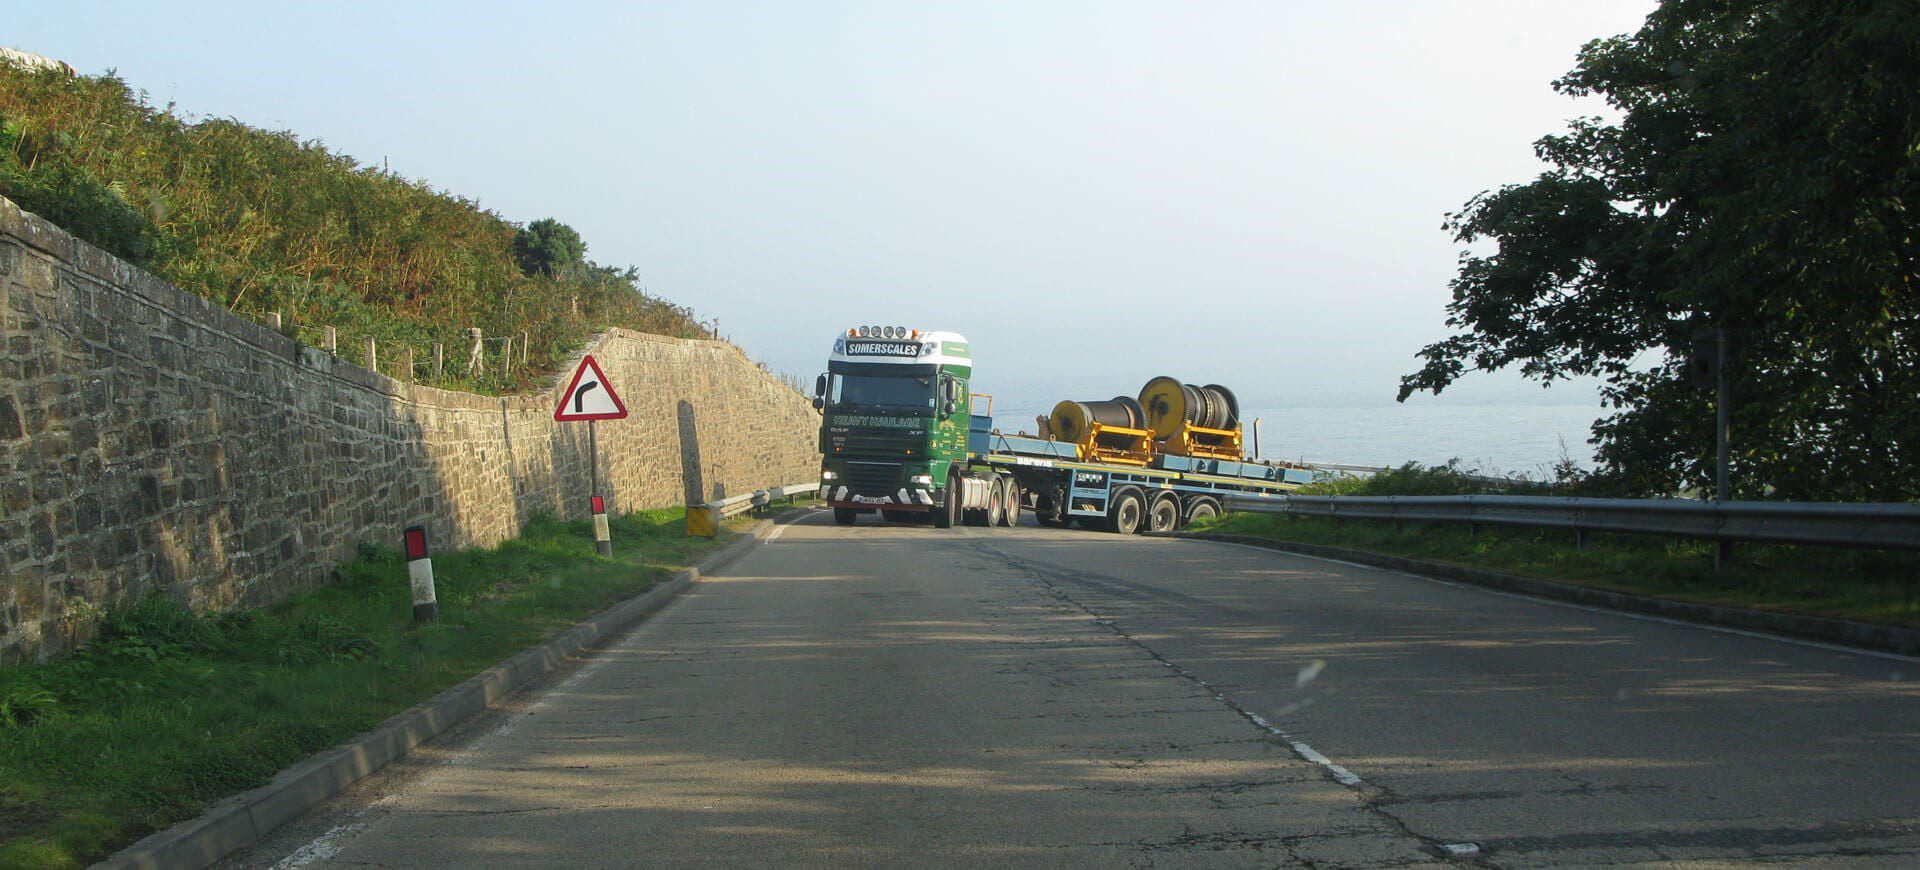 north coast 500 lorrrys getting stuck on the road